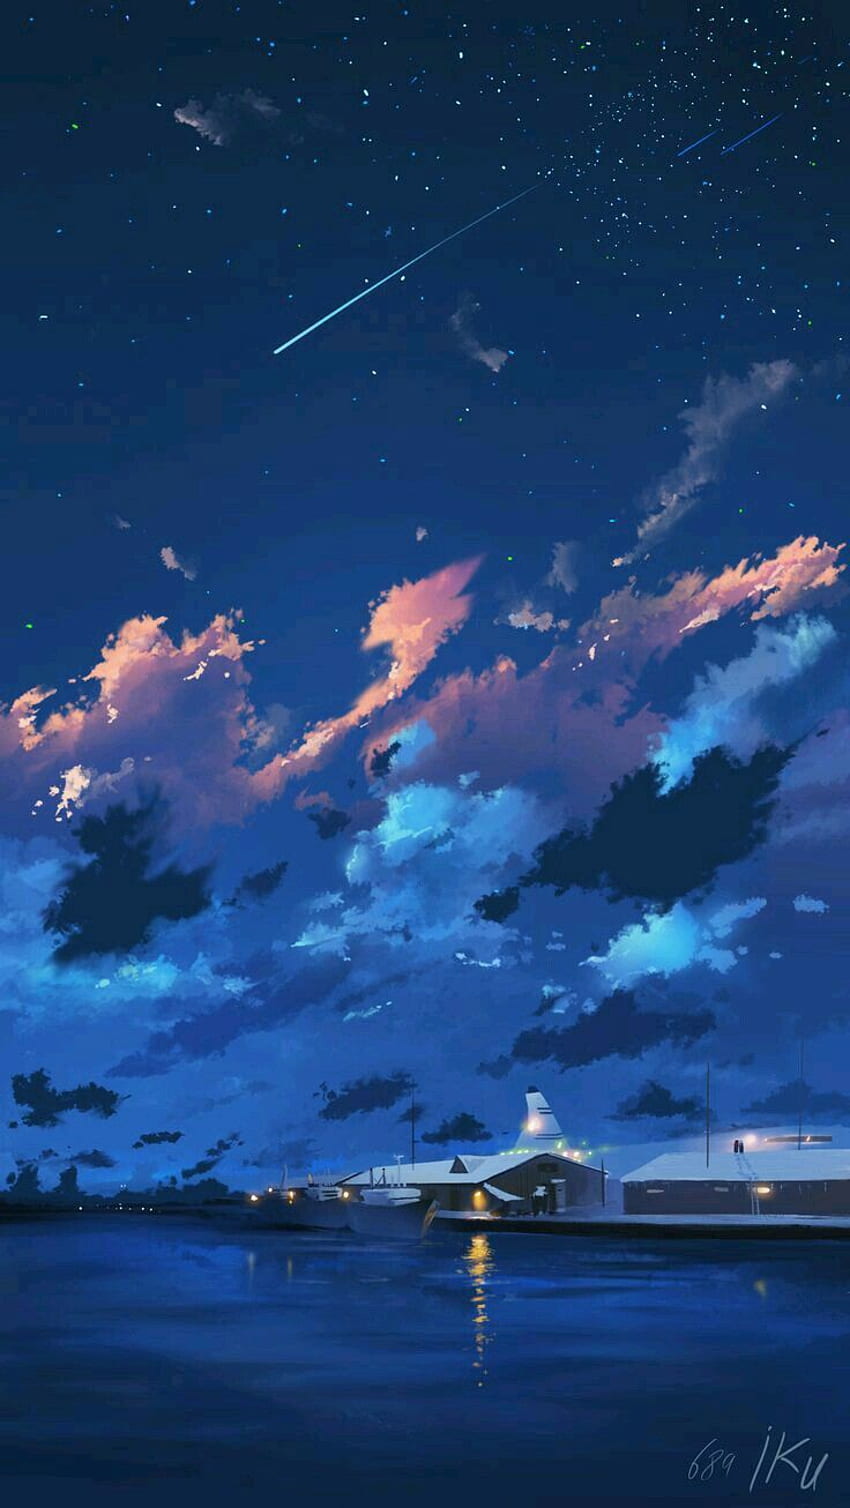 Shrine Gate Night Sky Anime Scenery 4K Wallpaper #6.2588